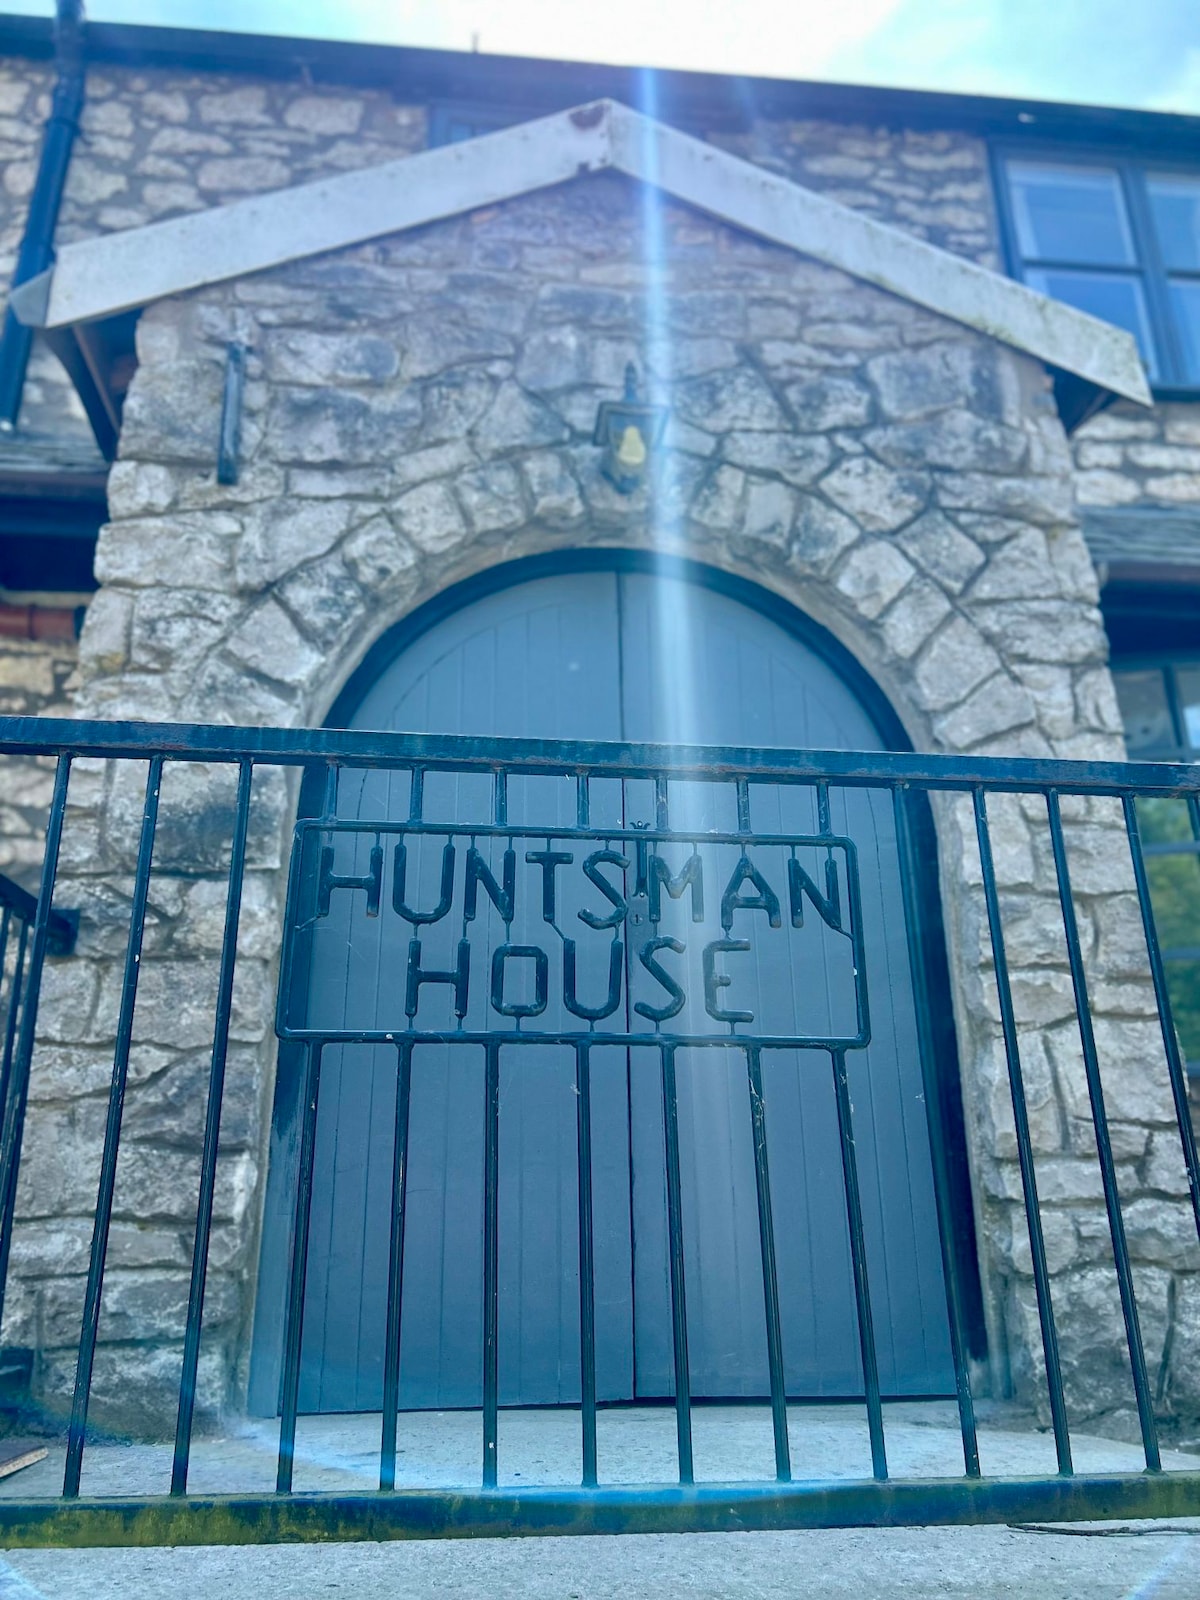 Huntsman House,  Whitford - Scenic rural location